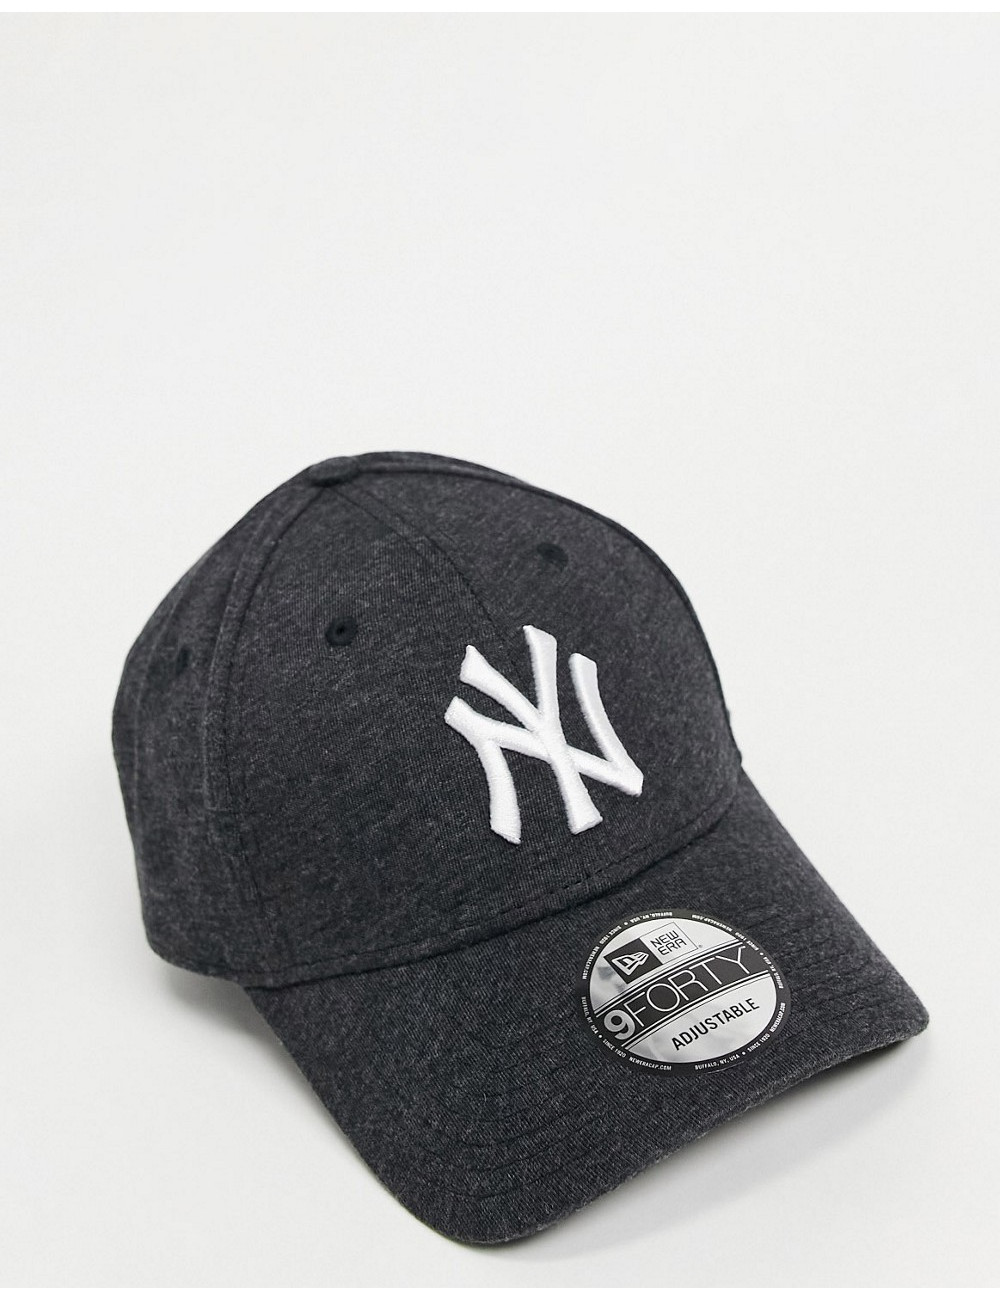 New Era 9forty cap in black